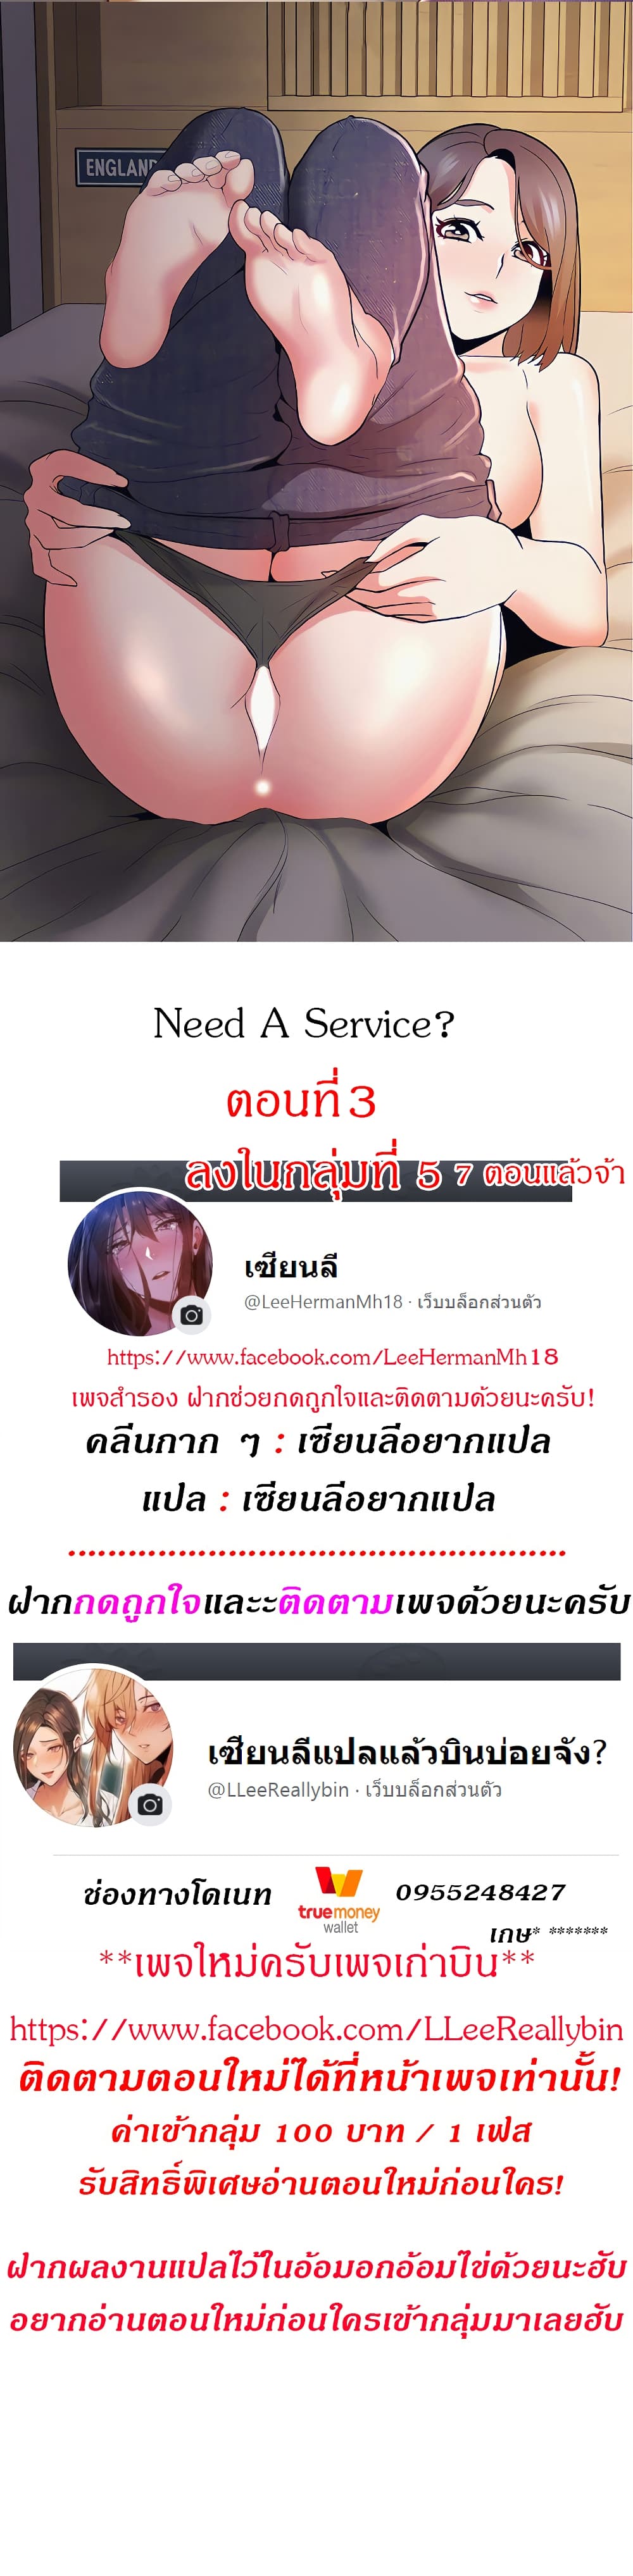 Need A Service? 3-3